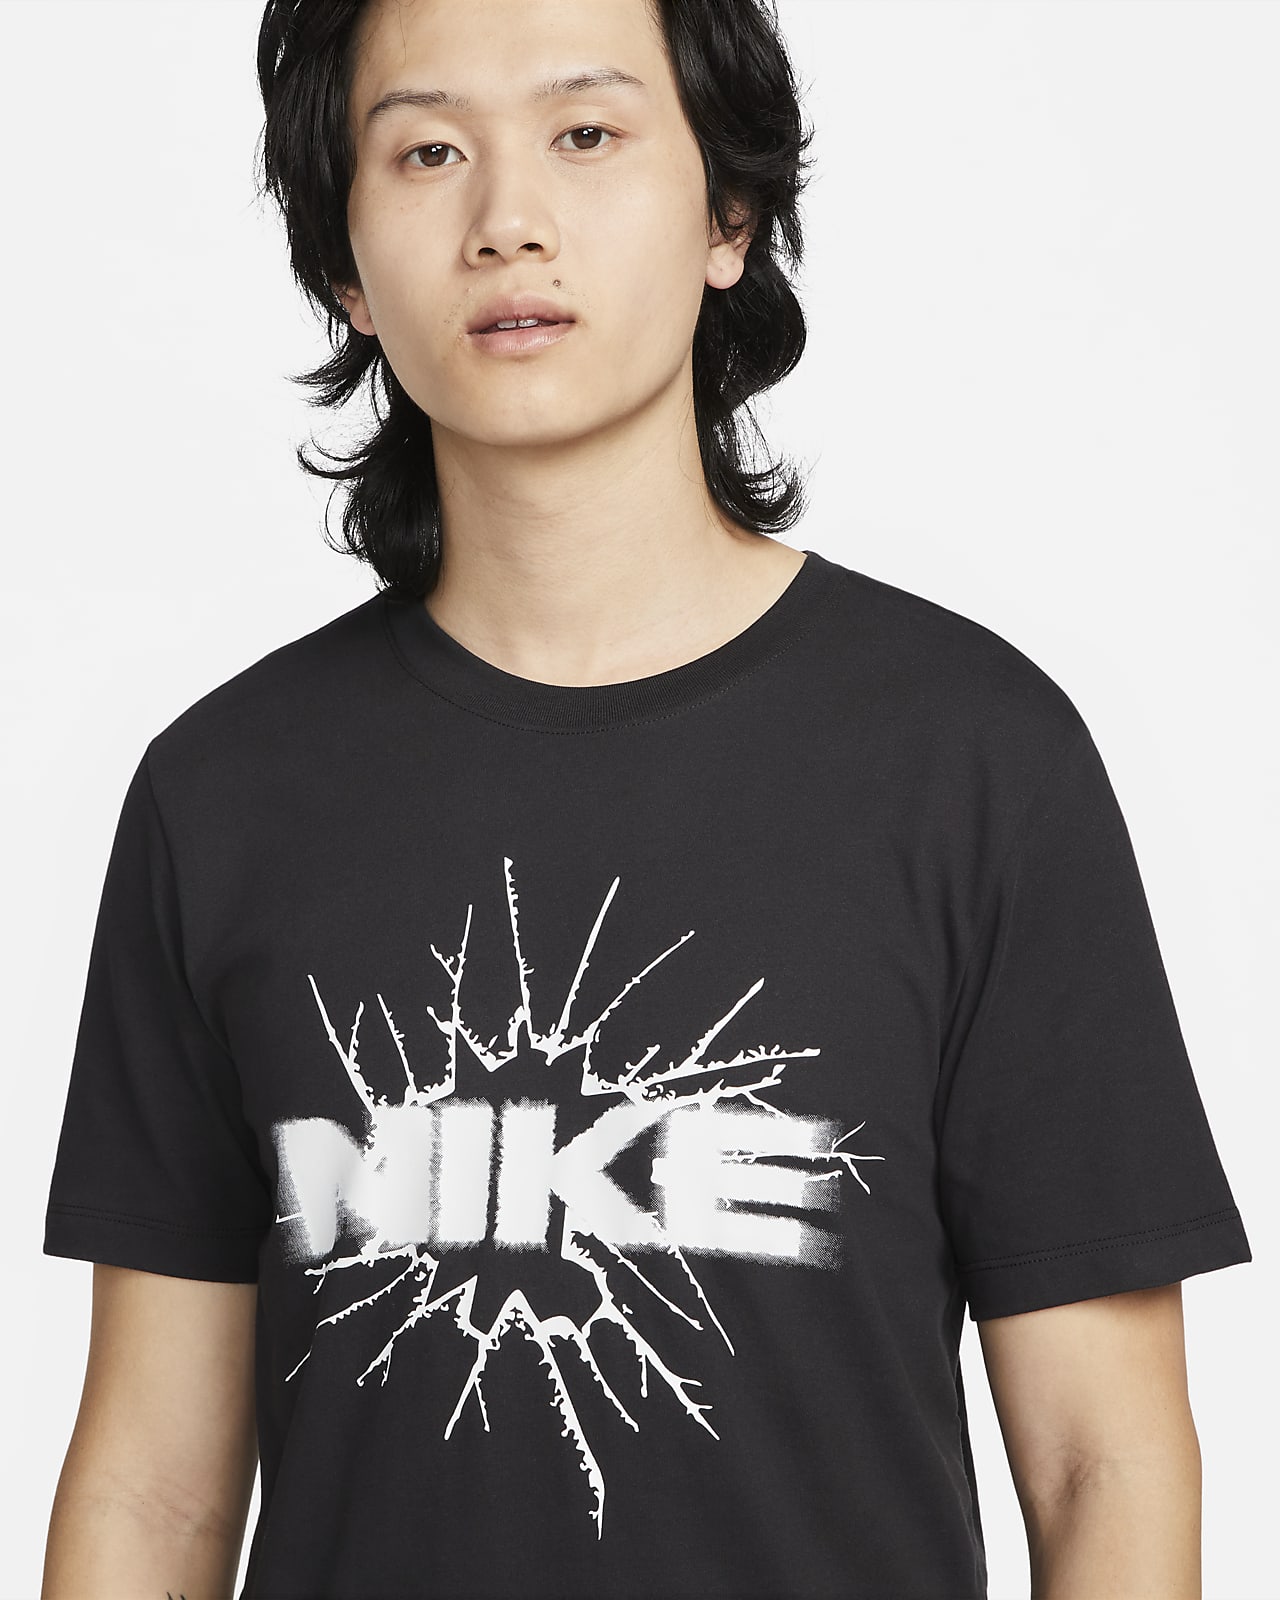 NIKE公式】ナイキ Dri-FIT メンズ バスケットボール Tシャツ